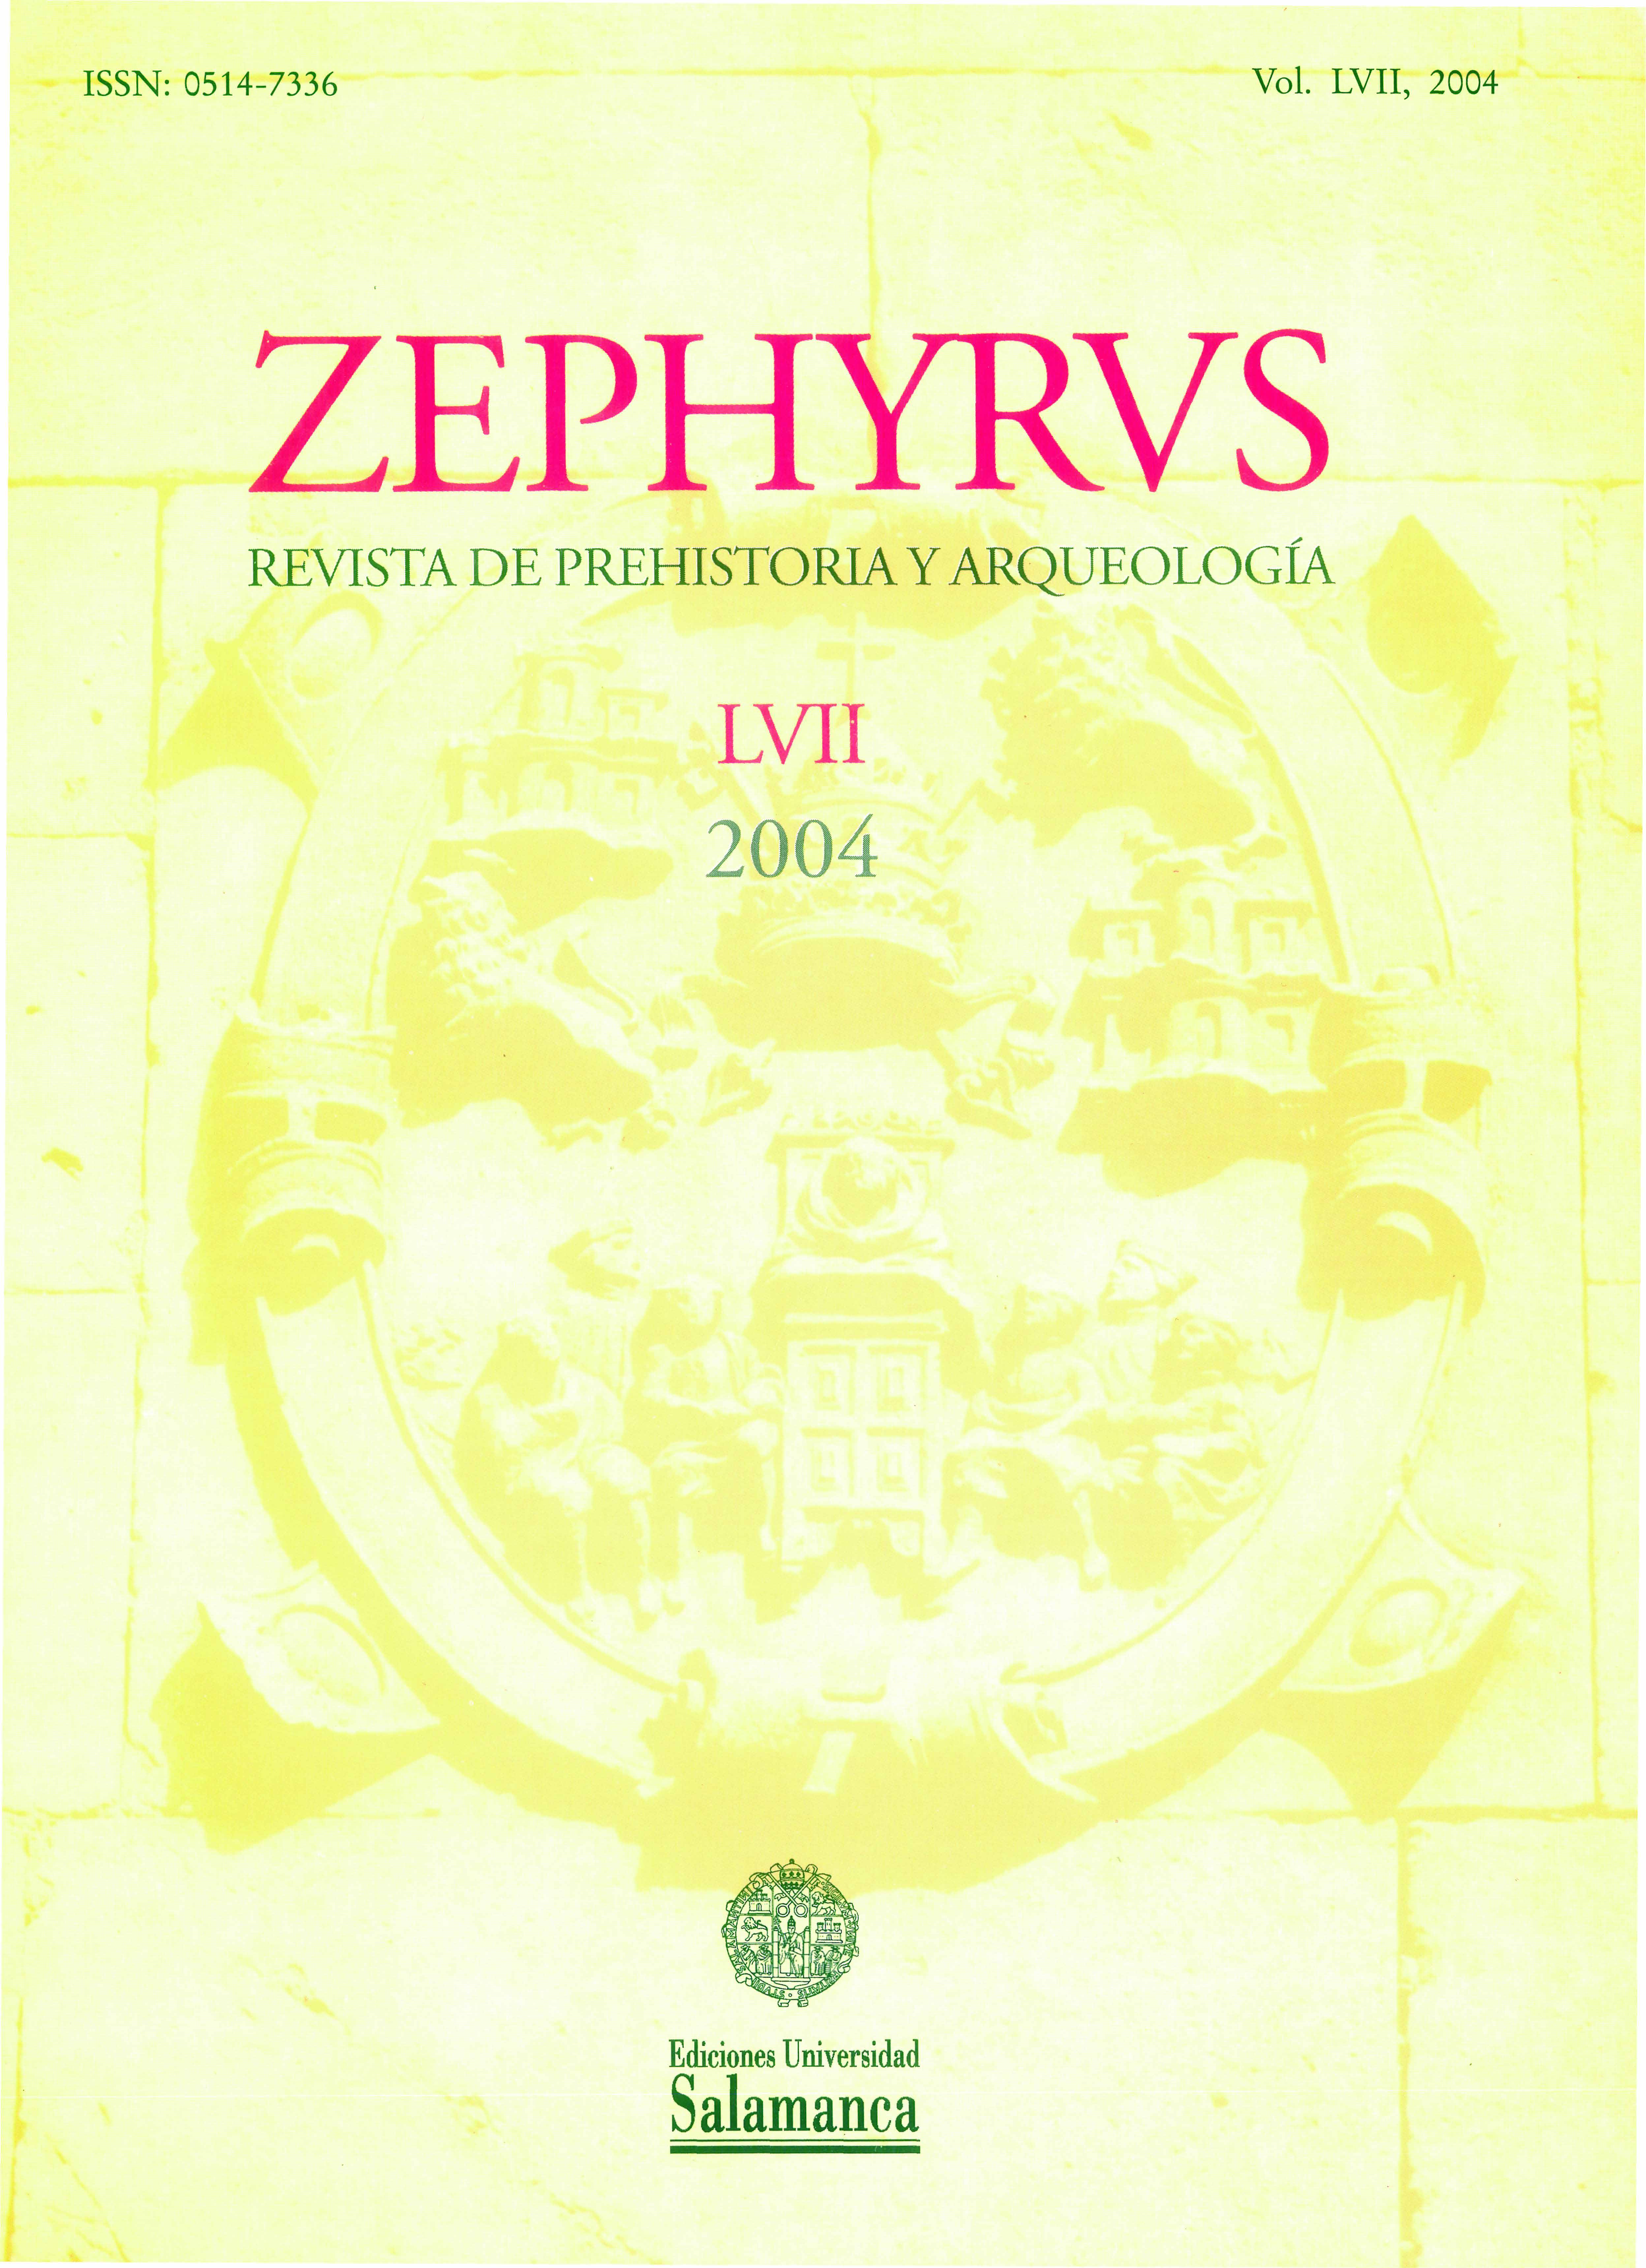                         Ver Vol. 57 (2004)
                    